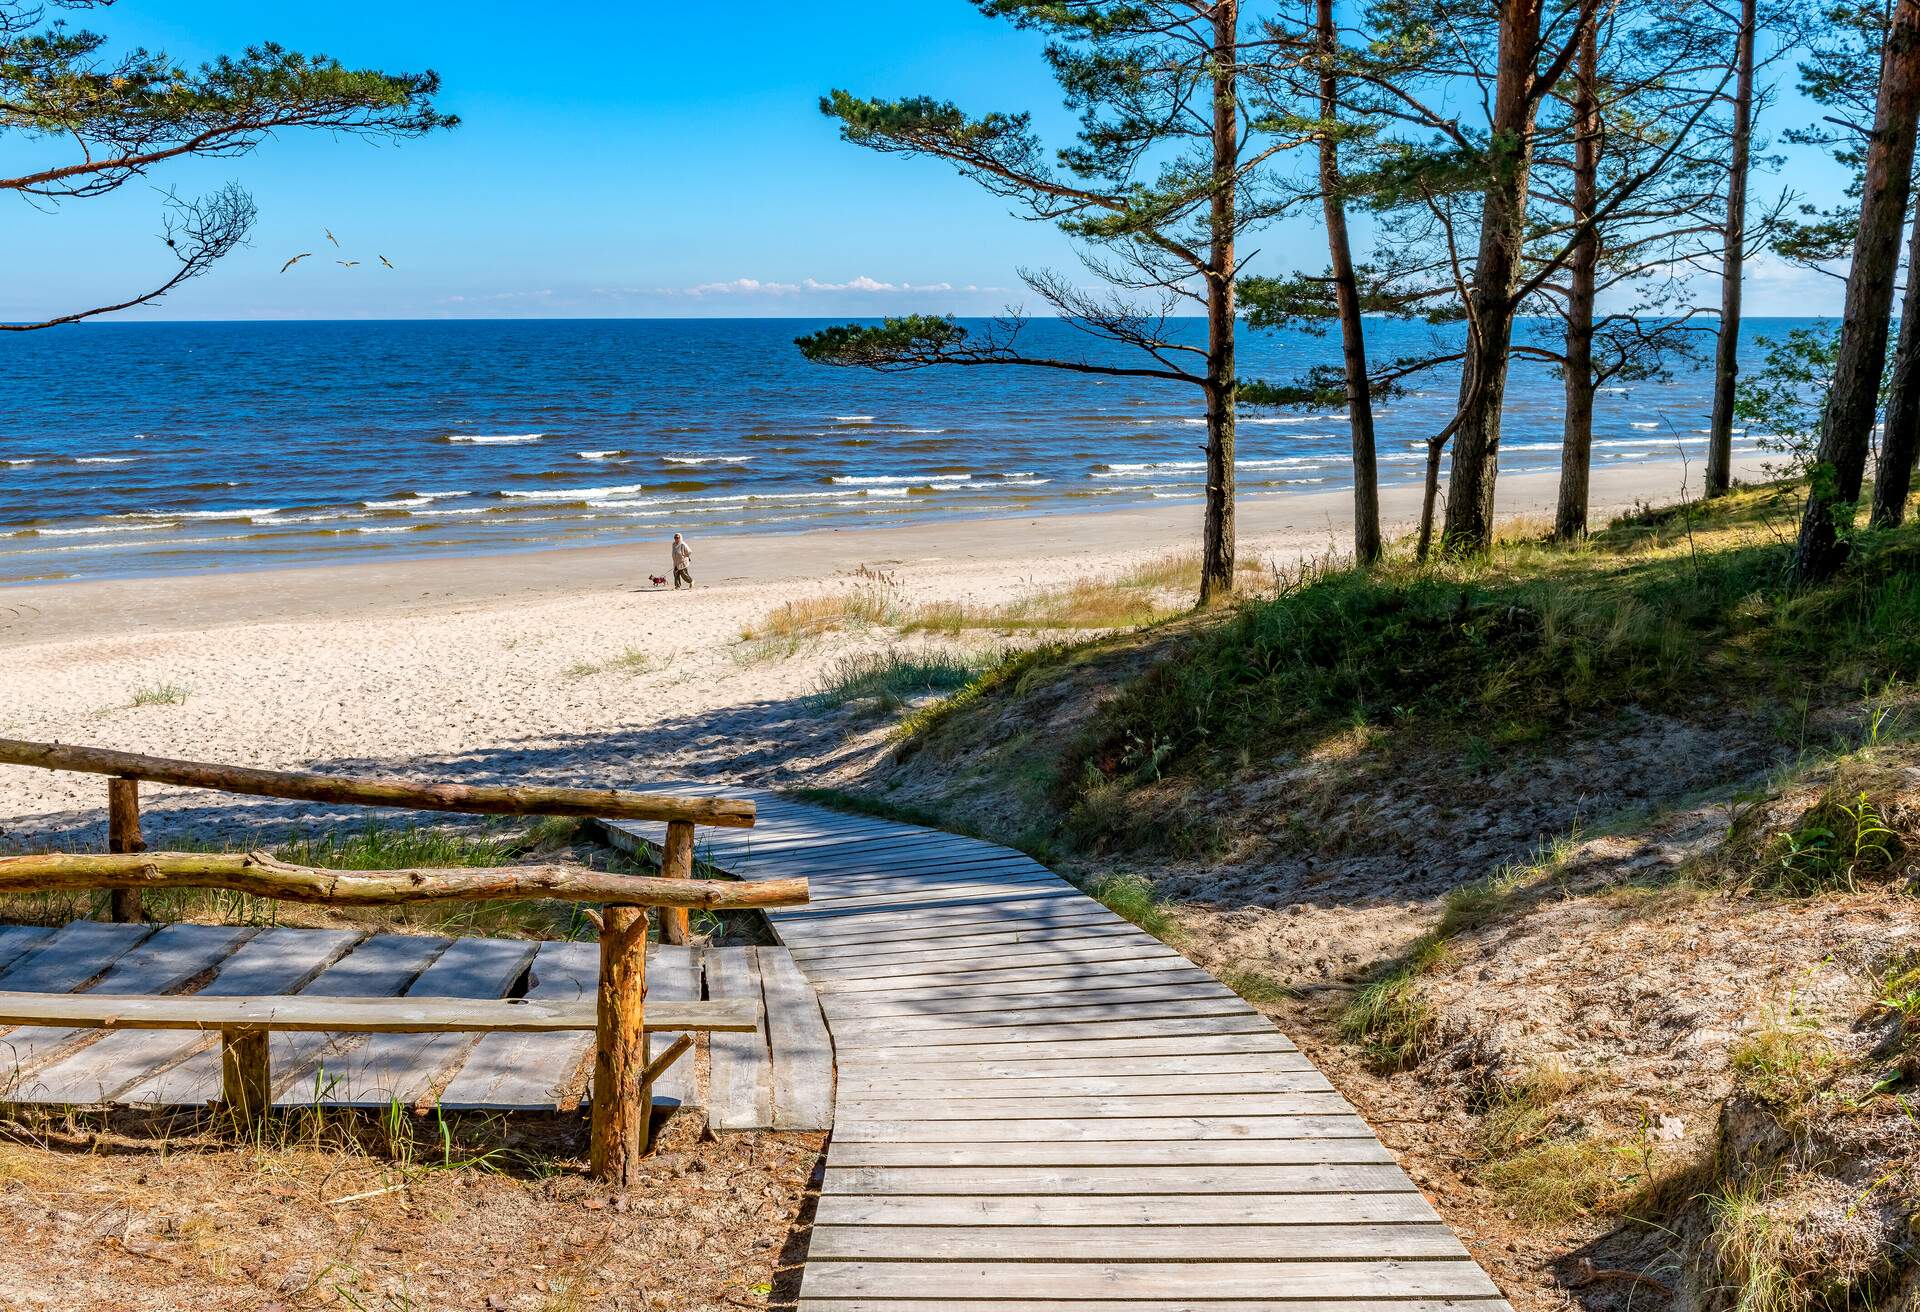 Jurmala is a famous international Baltic resort in Latvia